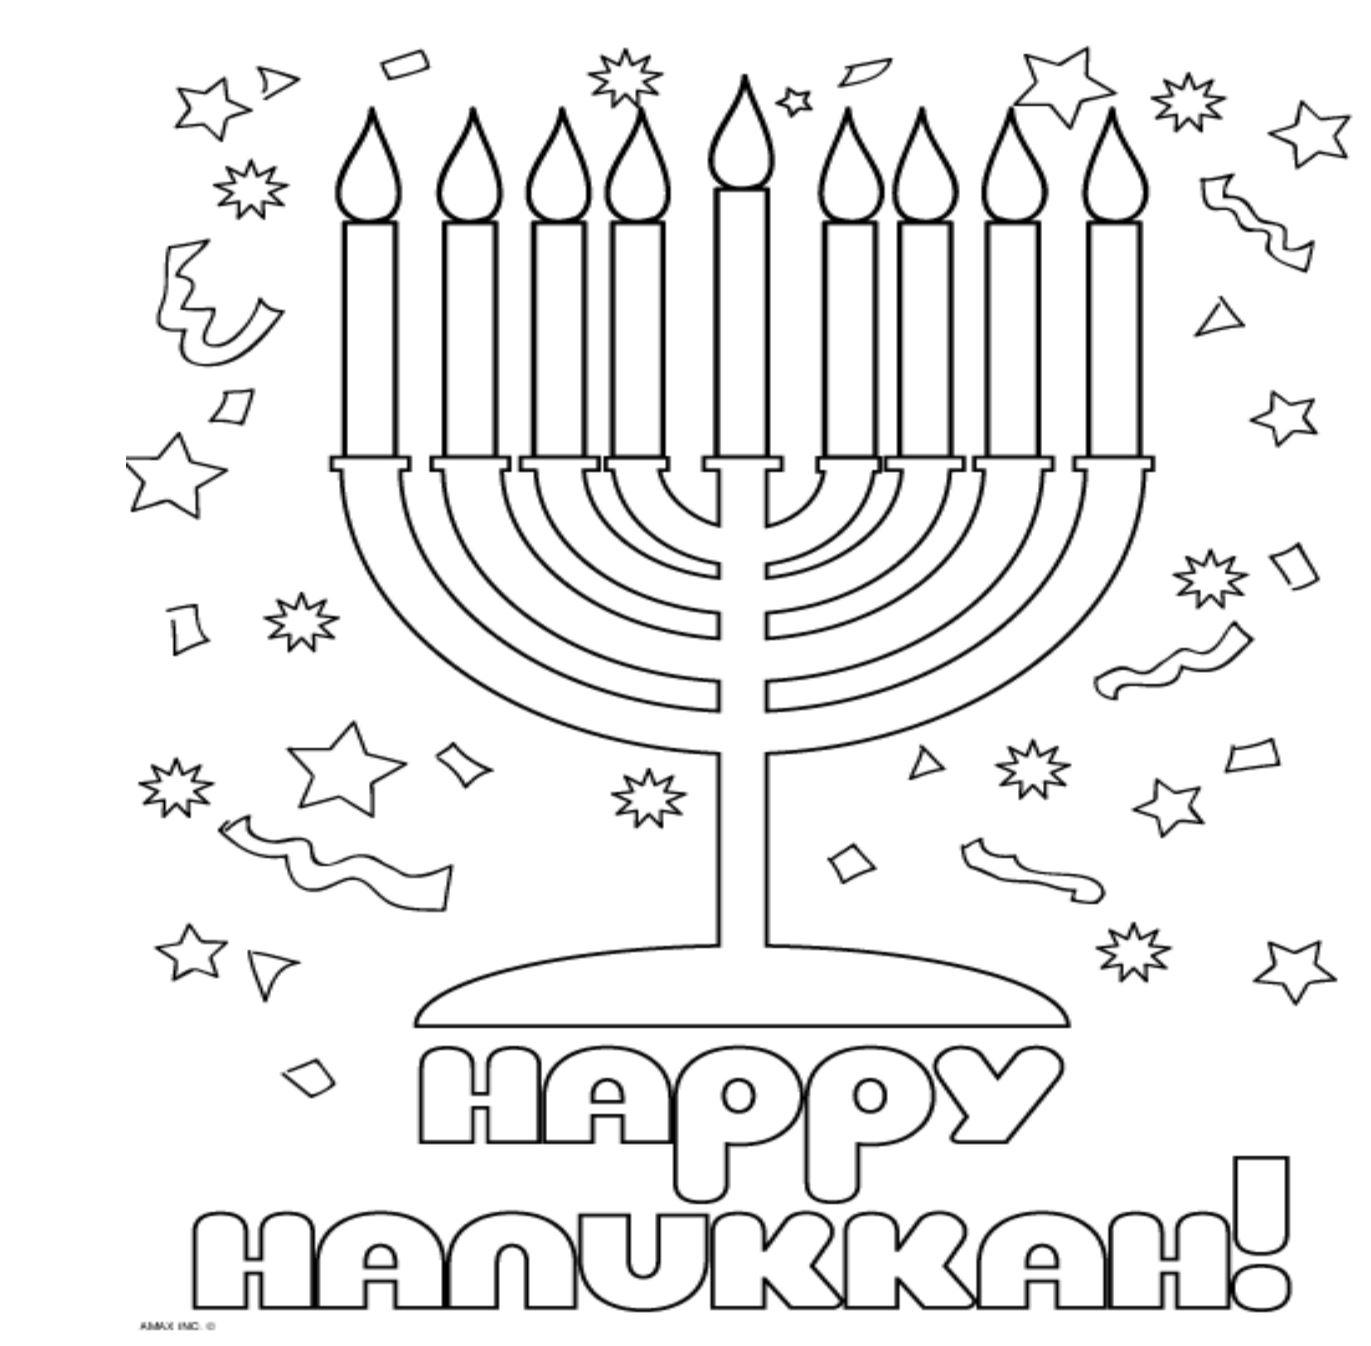 Holiday coloring contest- Hanukkah